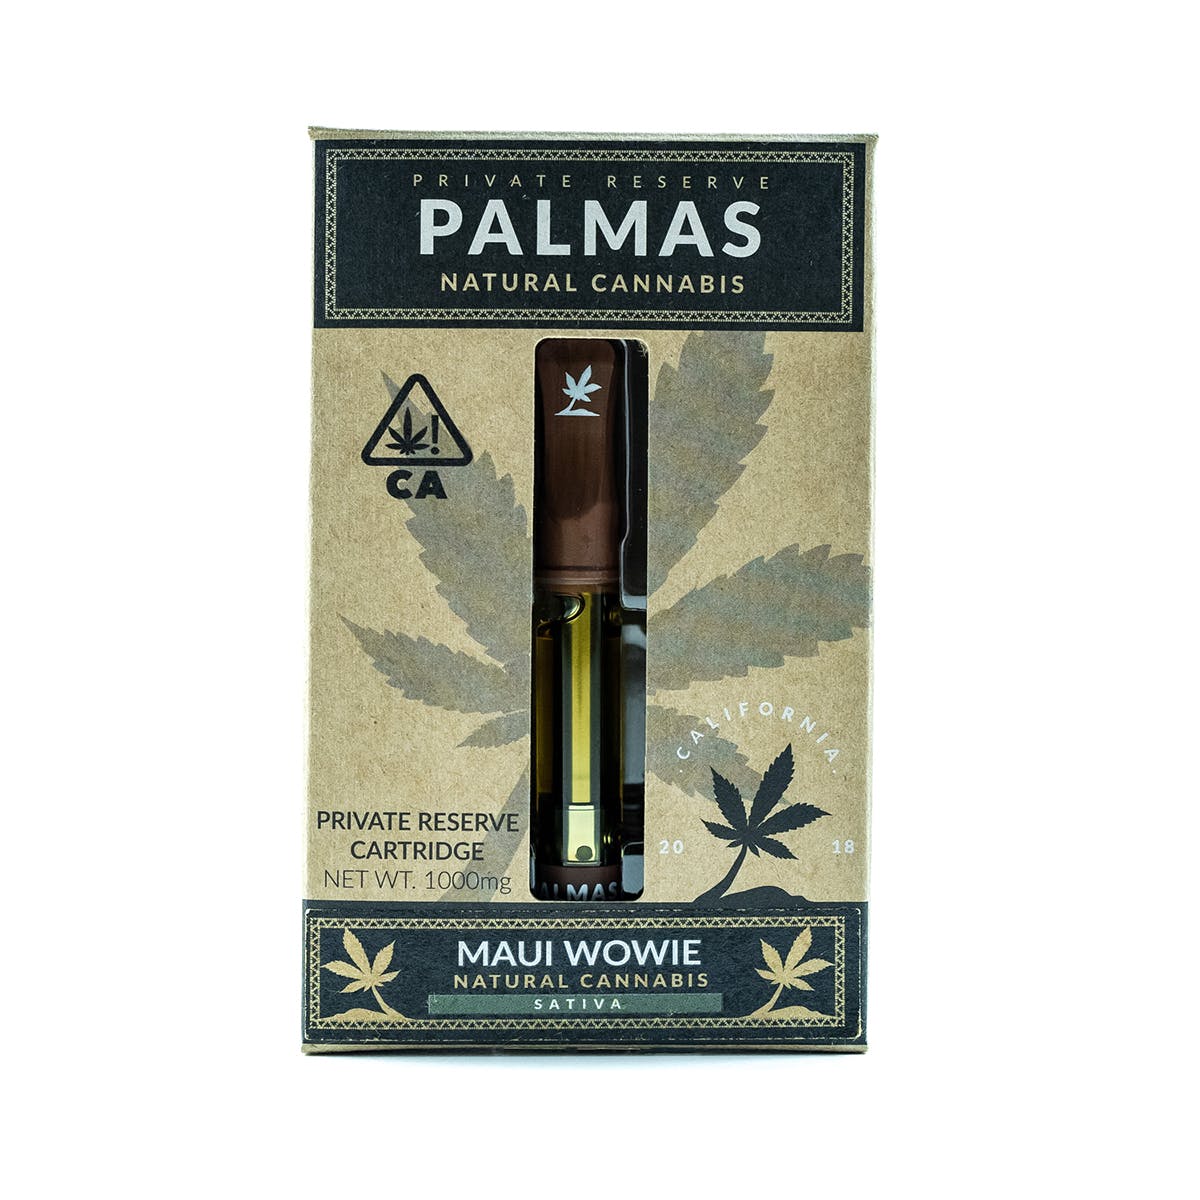 marijuana-dispensaries-diamond-collective-20-cap-in-san-bernardino-palmas-private-reserve-cartridge-maui-wowie